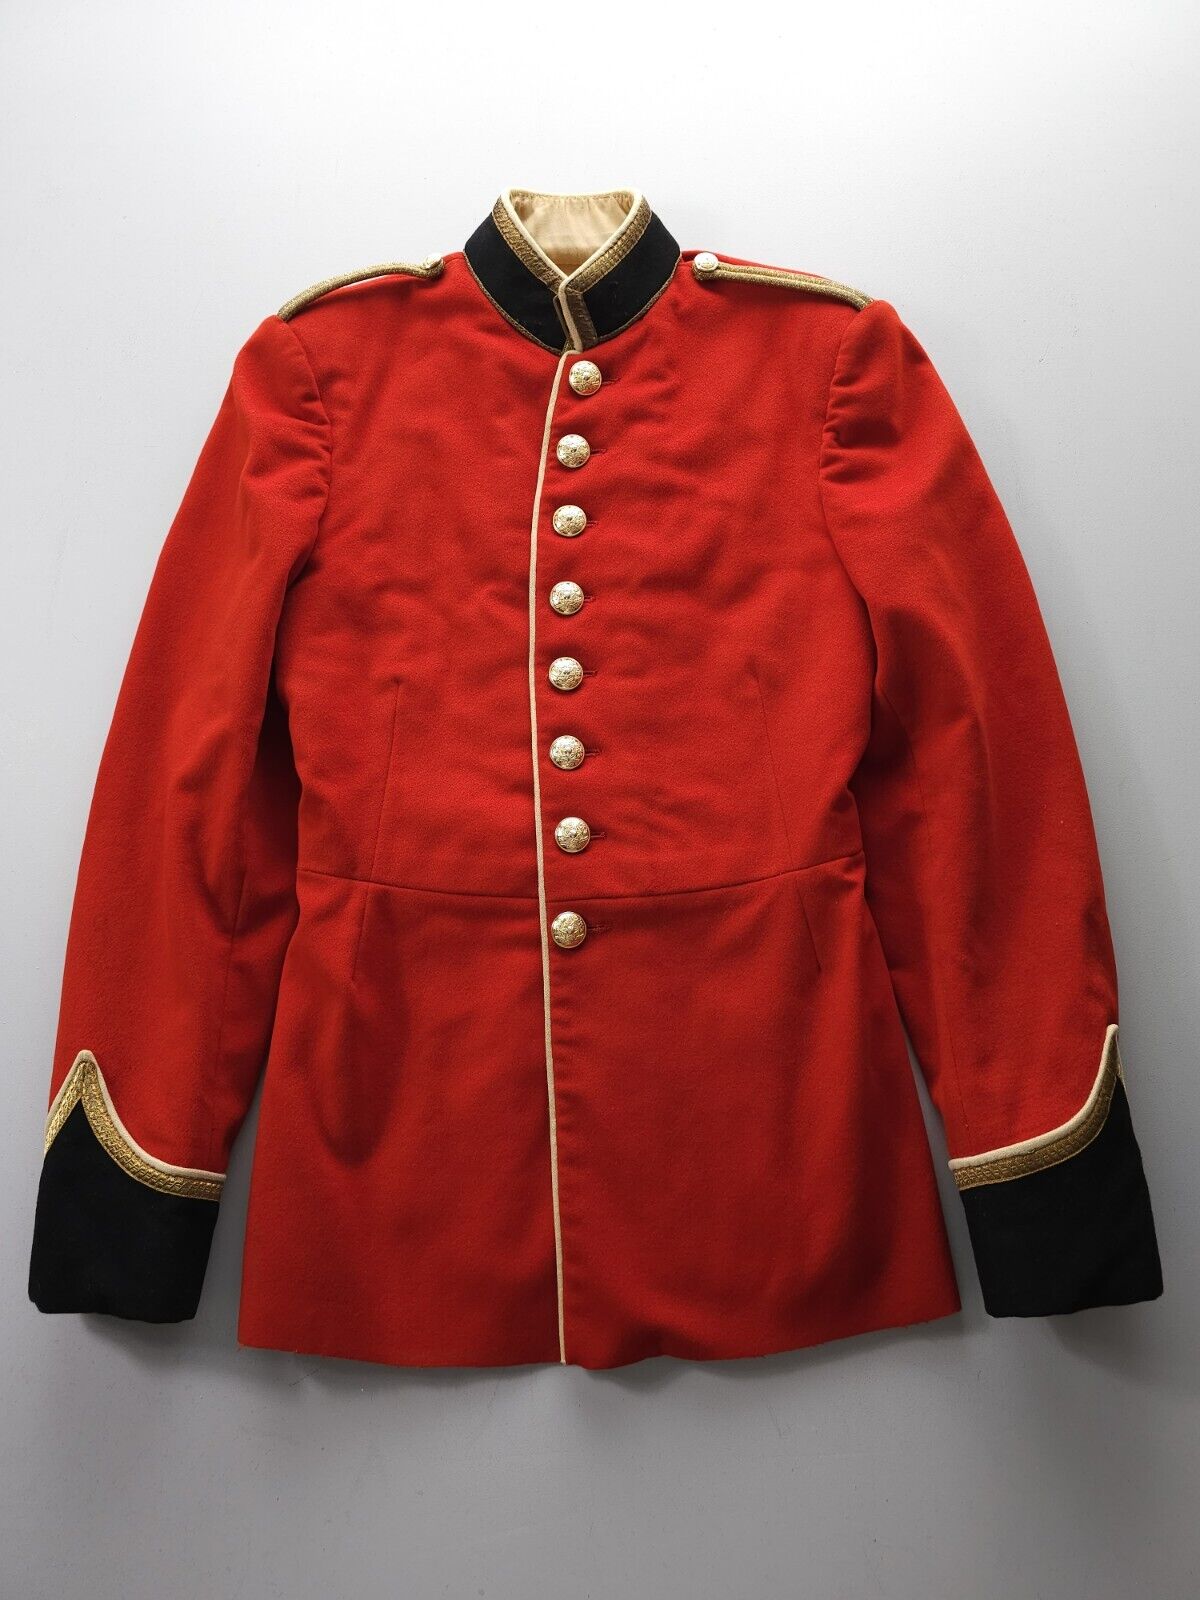 Antique Vintage Pre WW1 1800s Canadian British? Uniform Army Tunic Frock Sm